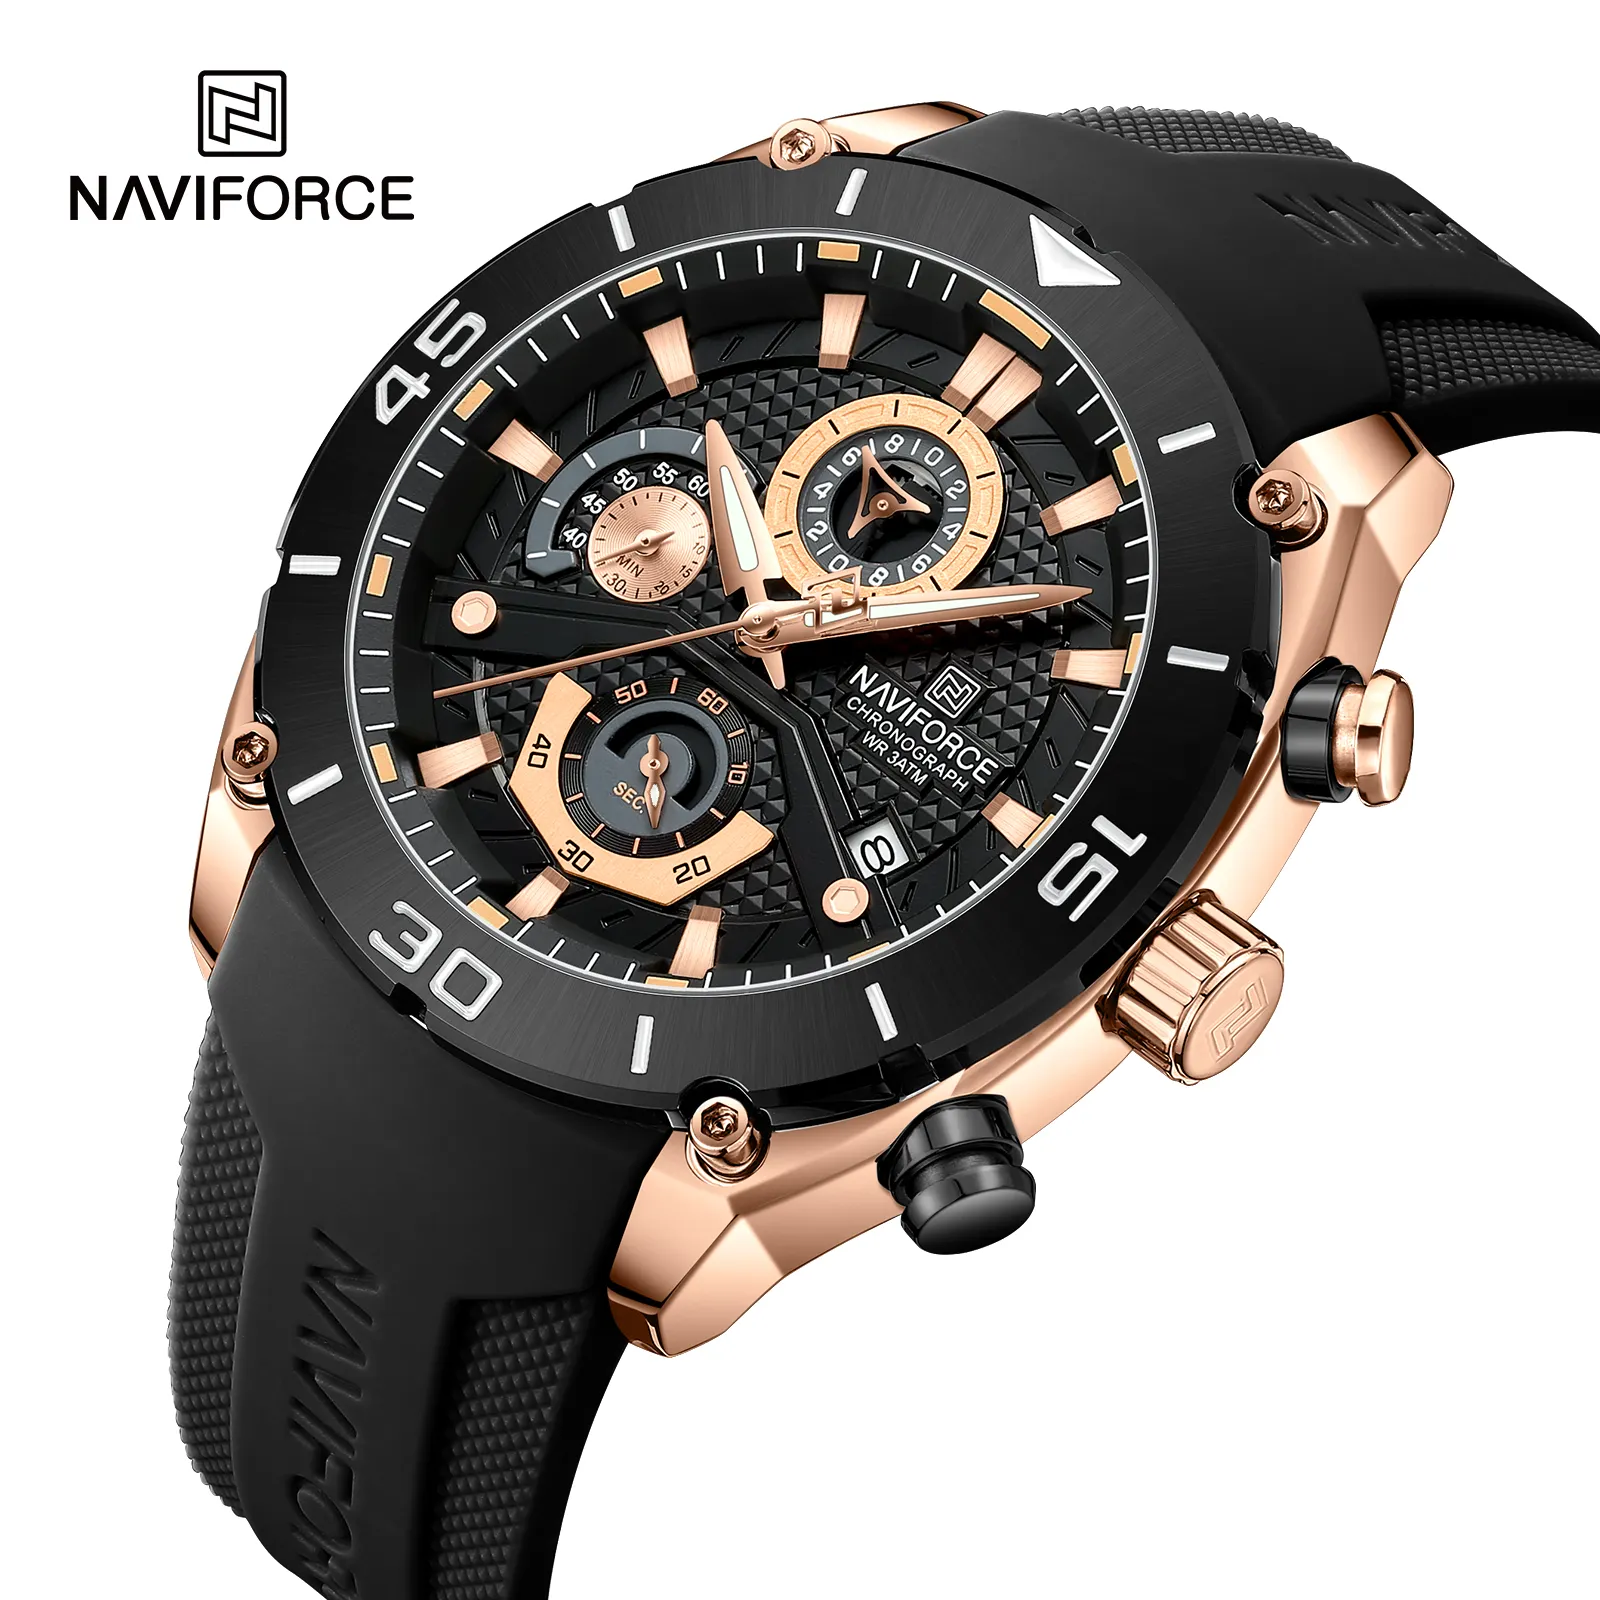 NaviforceNF8038ホット販売広州マンクォーツ時計低価格シリコンストラップ防水クロノグラフ低moqビジネス腕時計